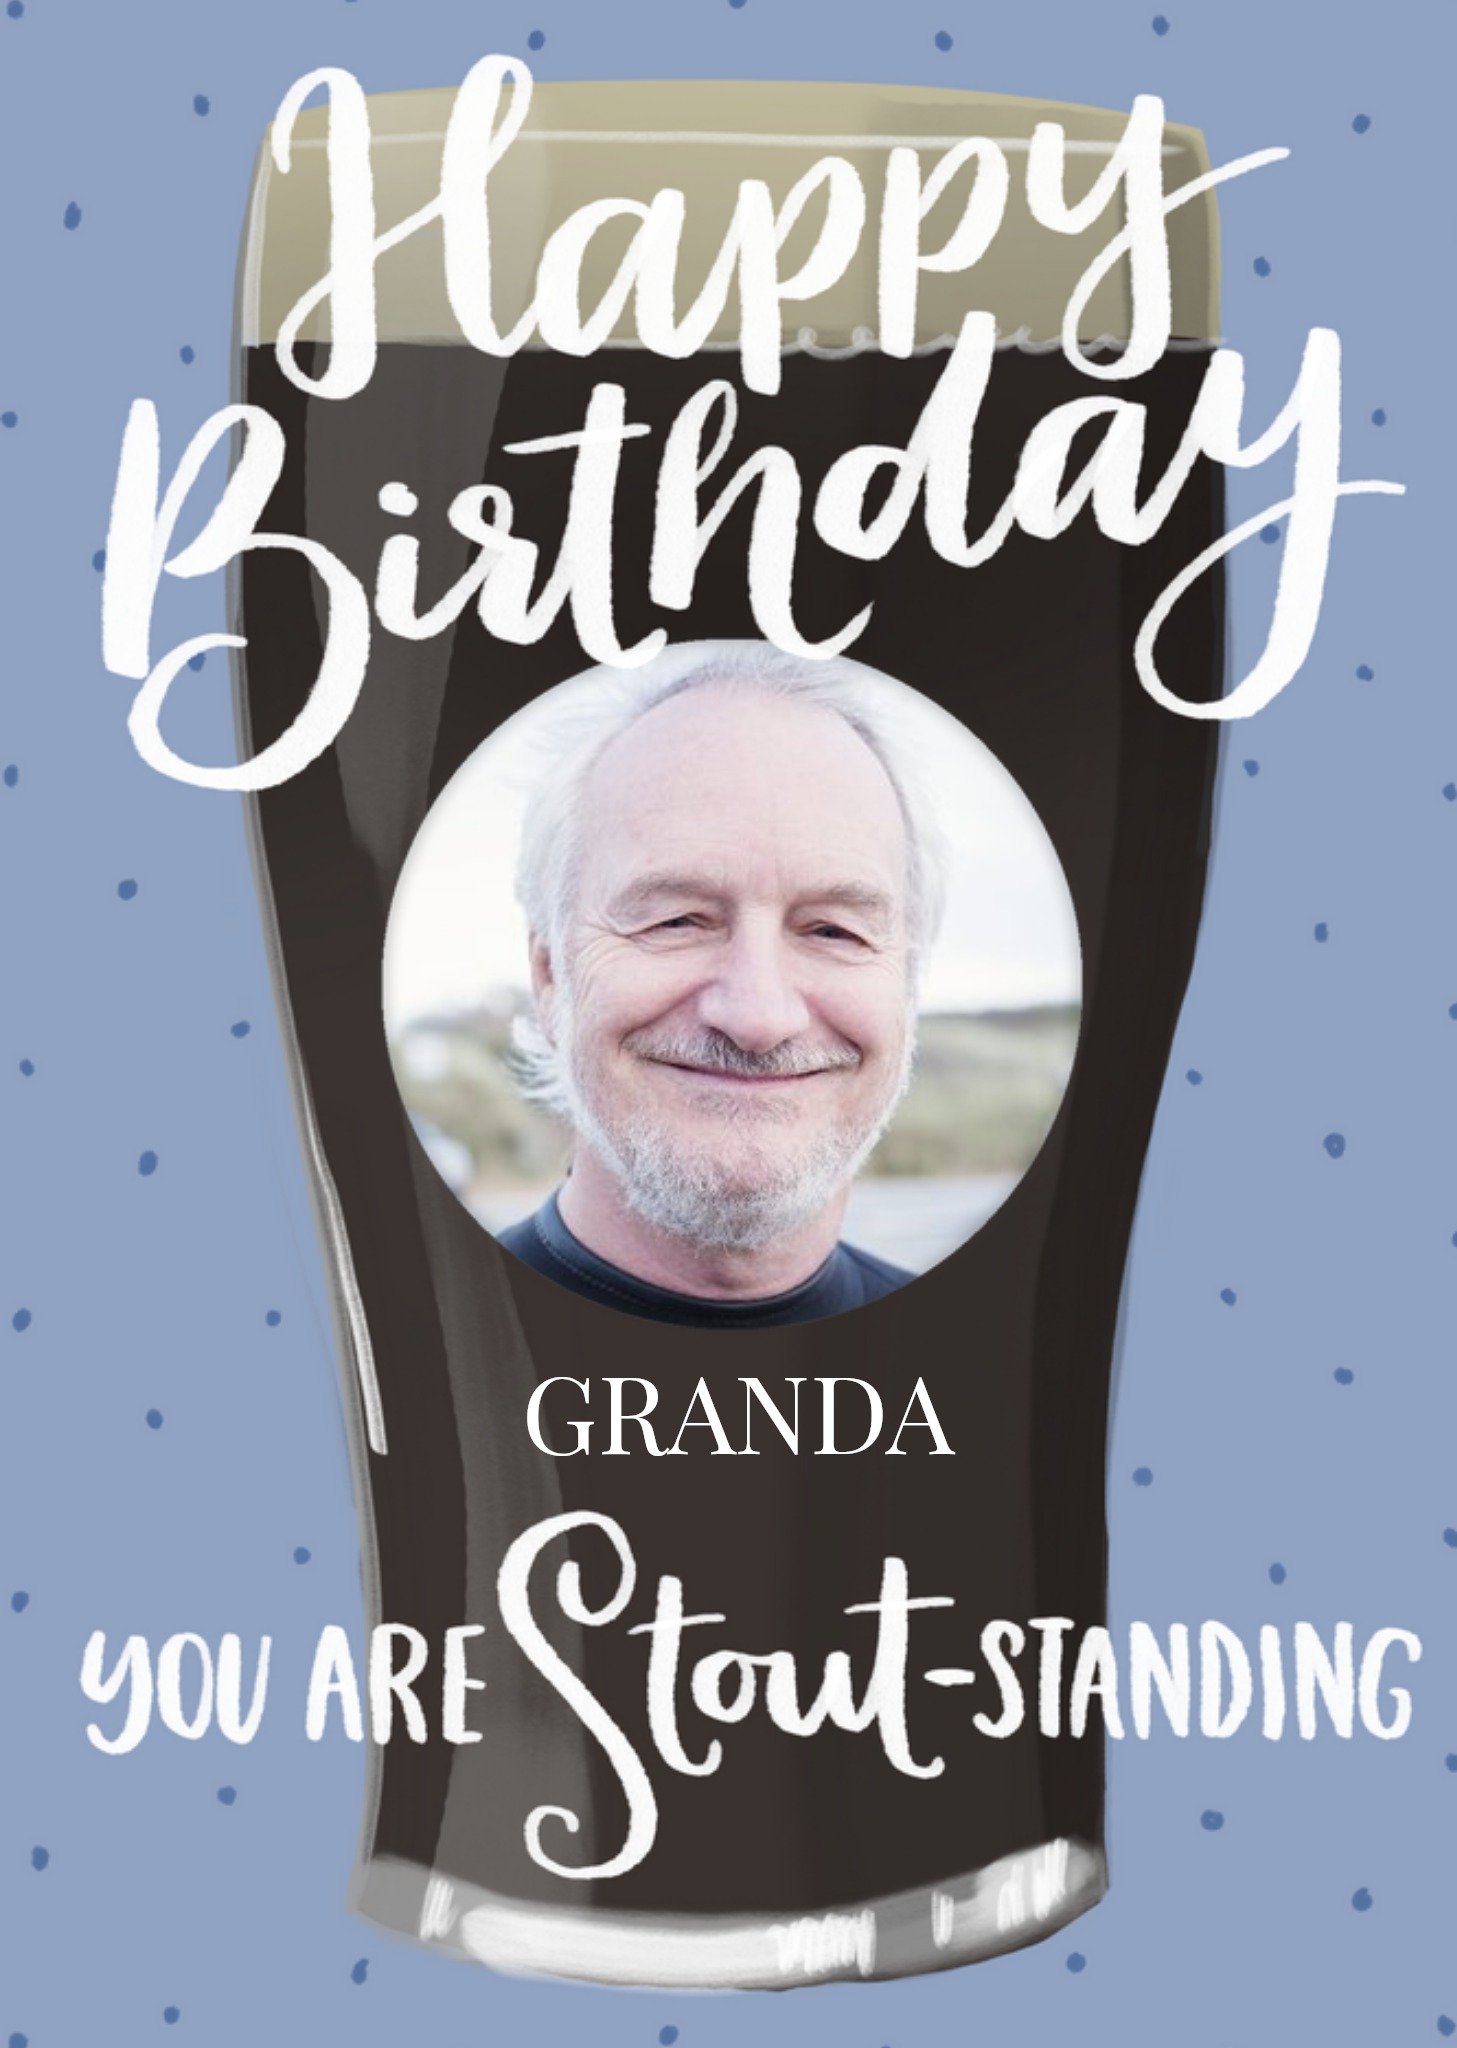 Moonpig Illustrated Stout-Standing Customisable Photo Upload Birthday Card, Large